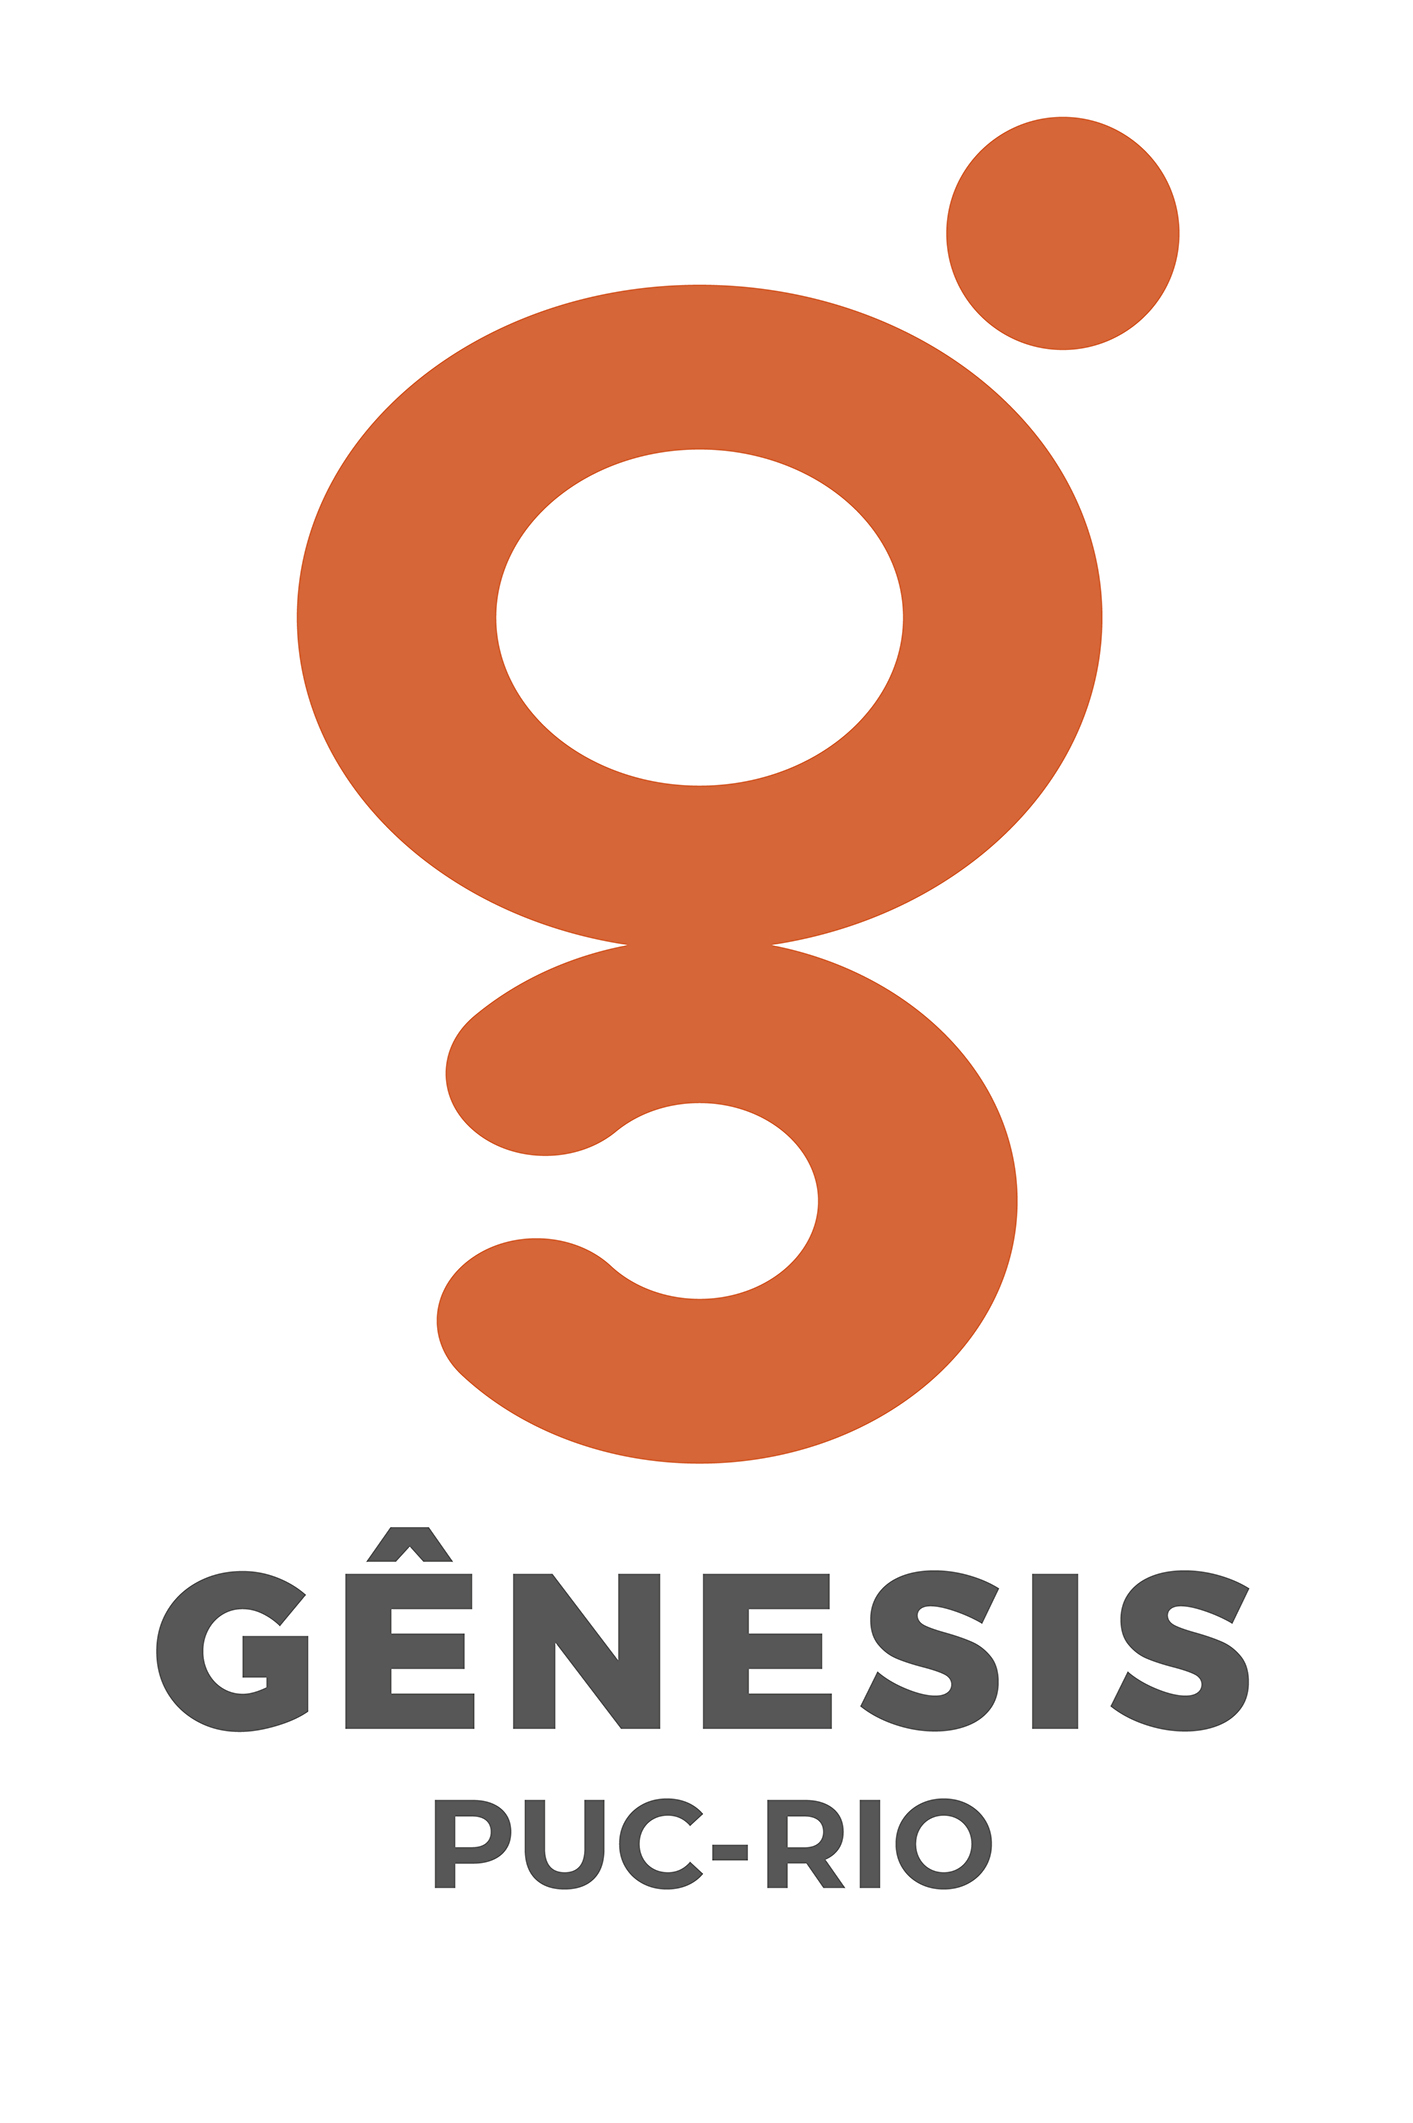 Image of Genesis brand